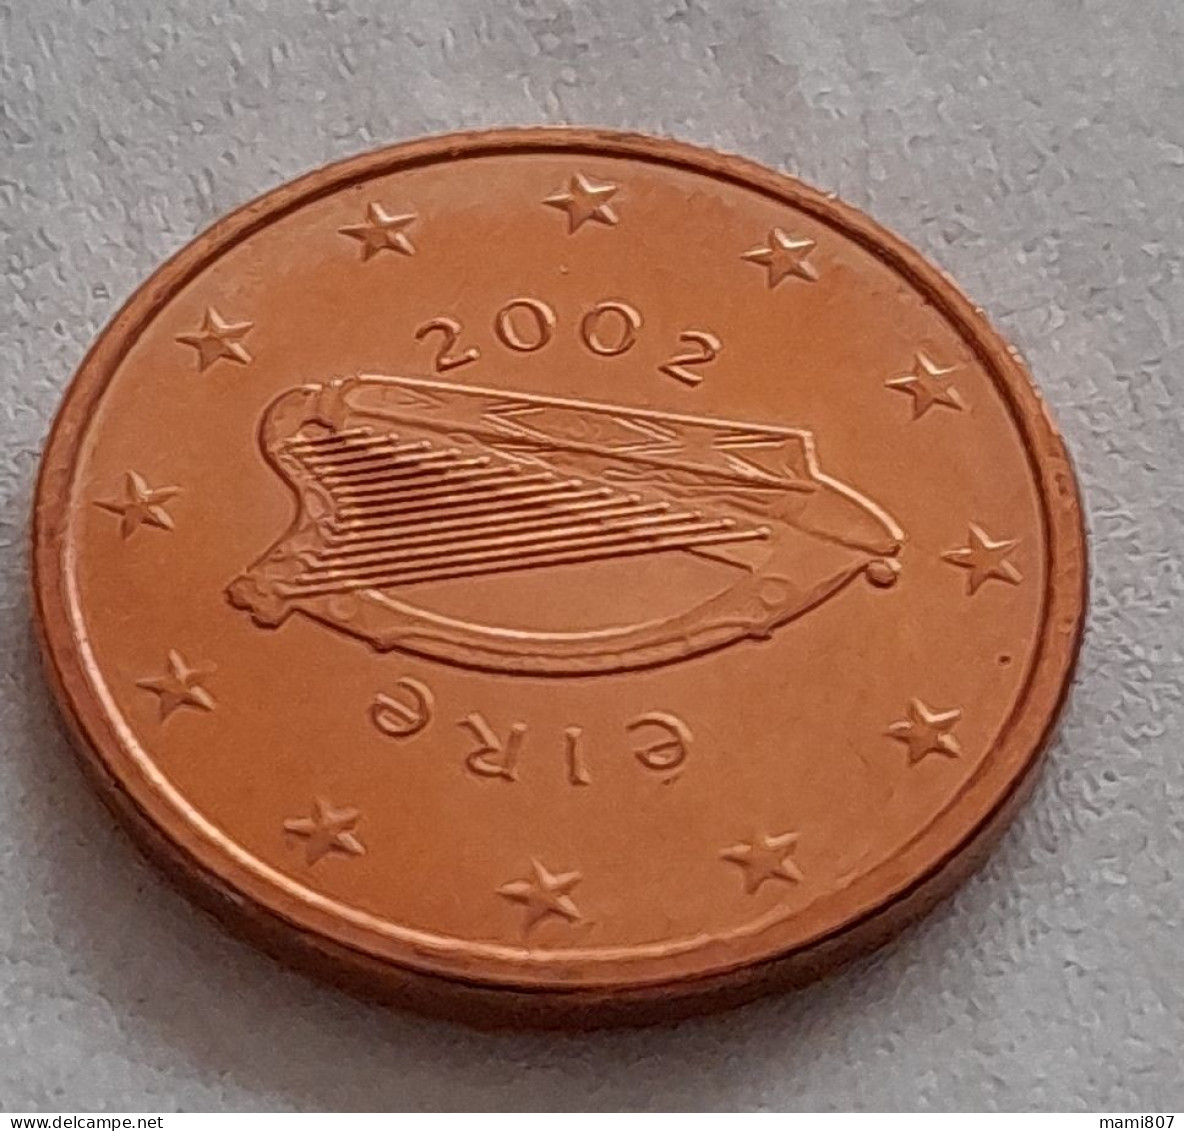 IRLANDE - 5 Cme EURO 2002 - SUP - Irlanda